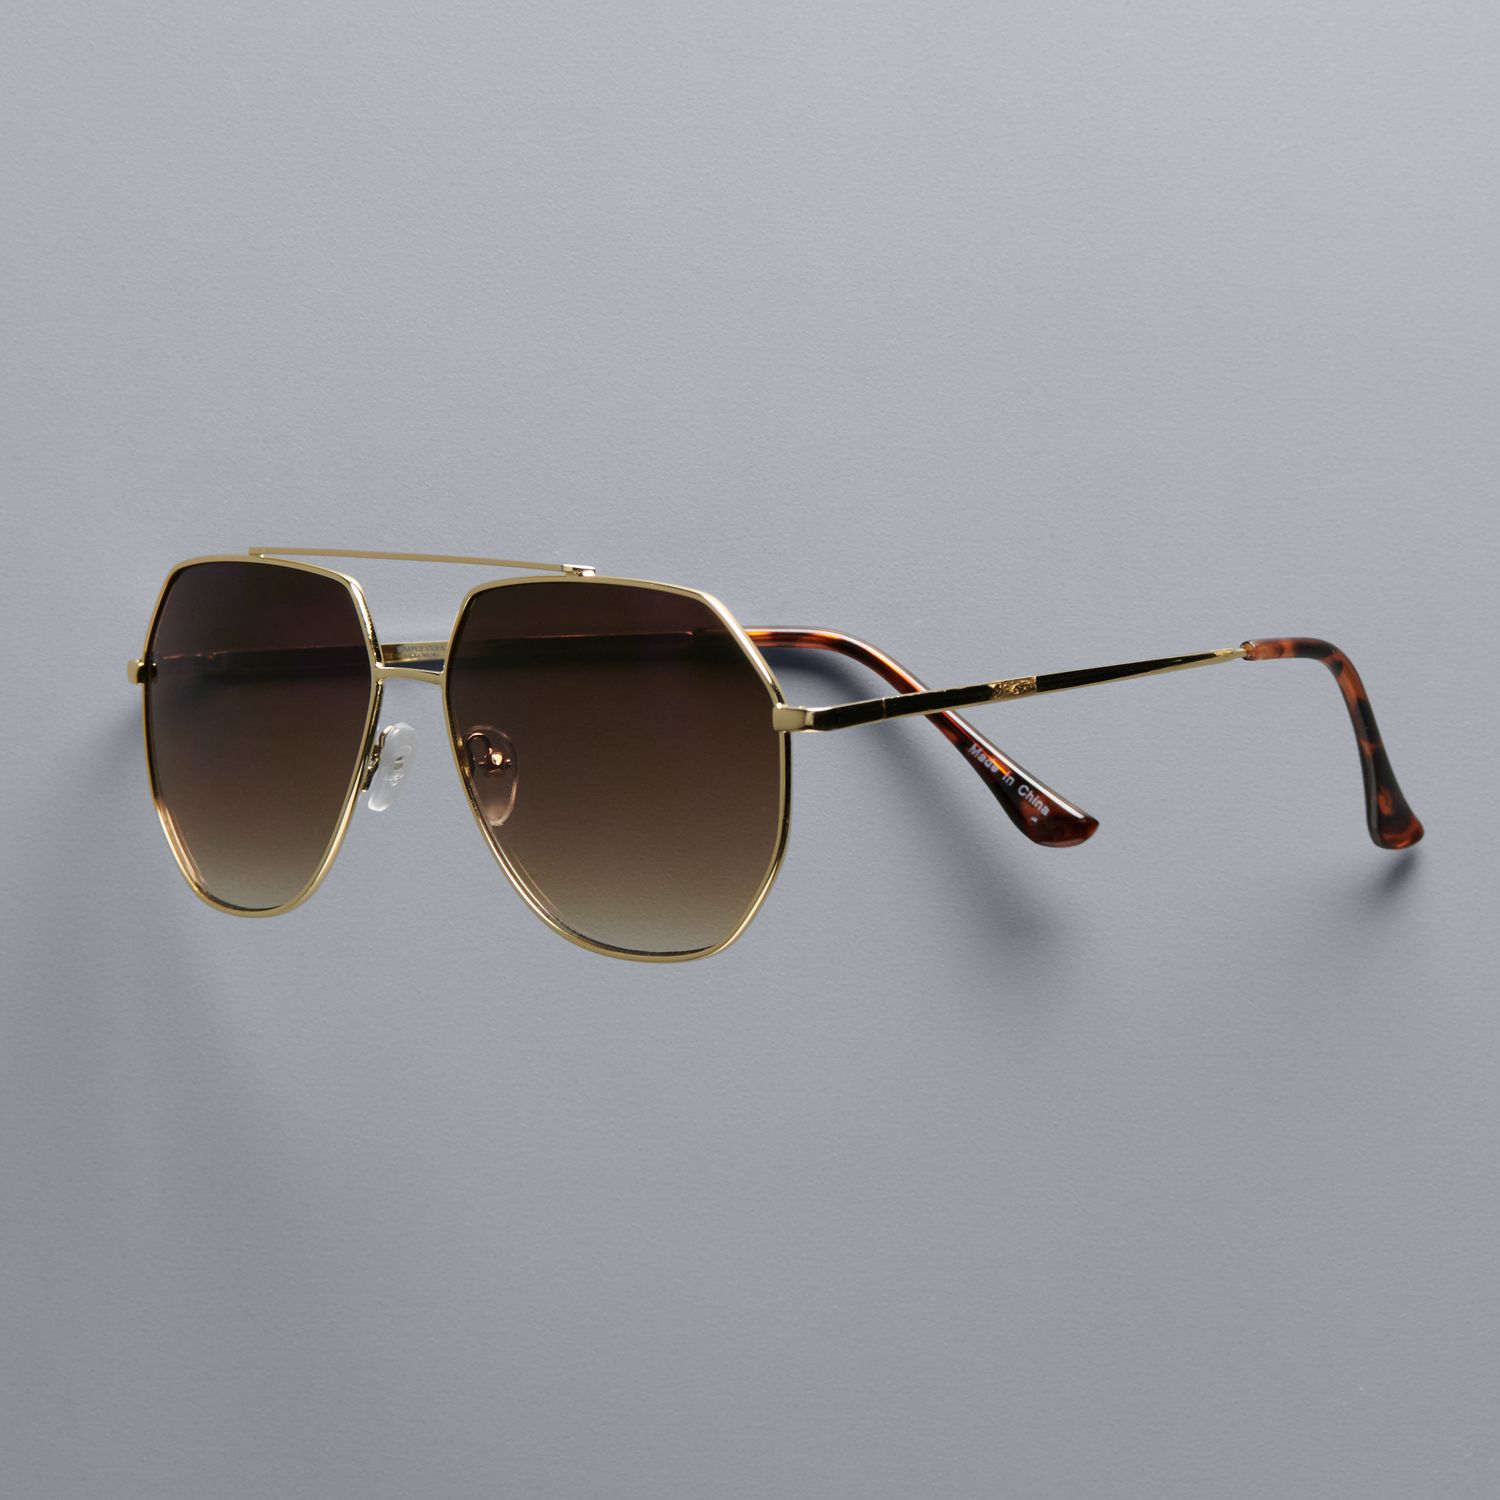 60mm wayfarer sunglasses